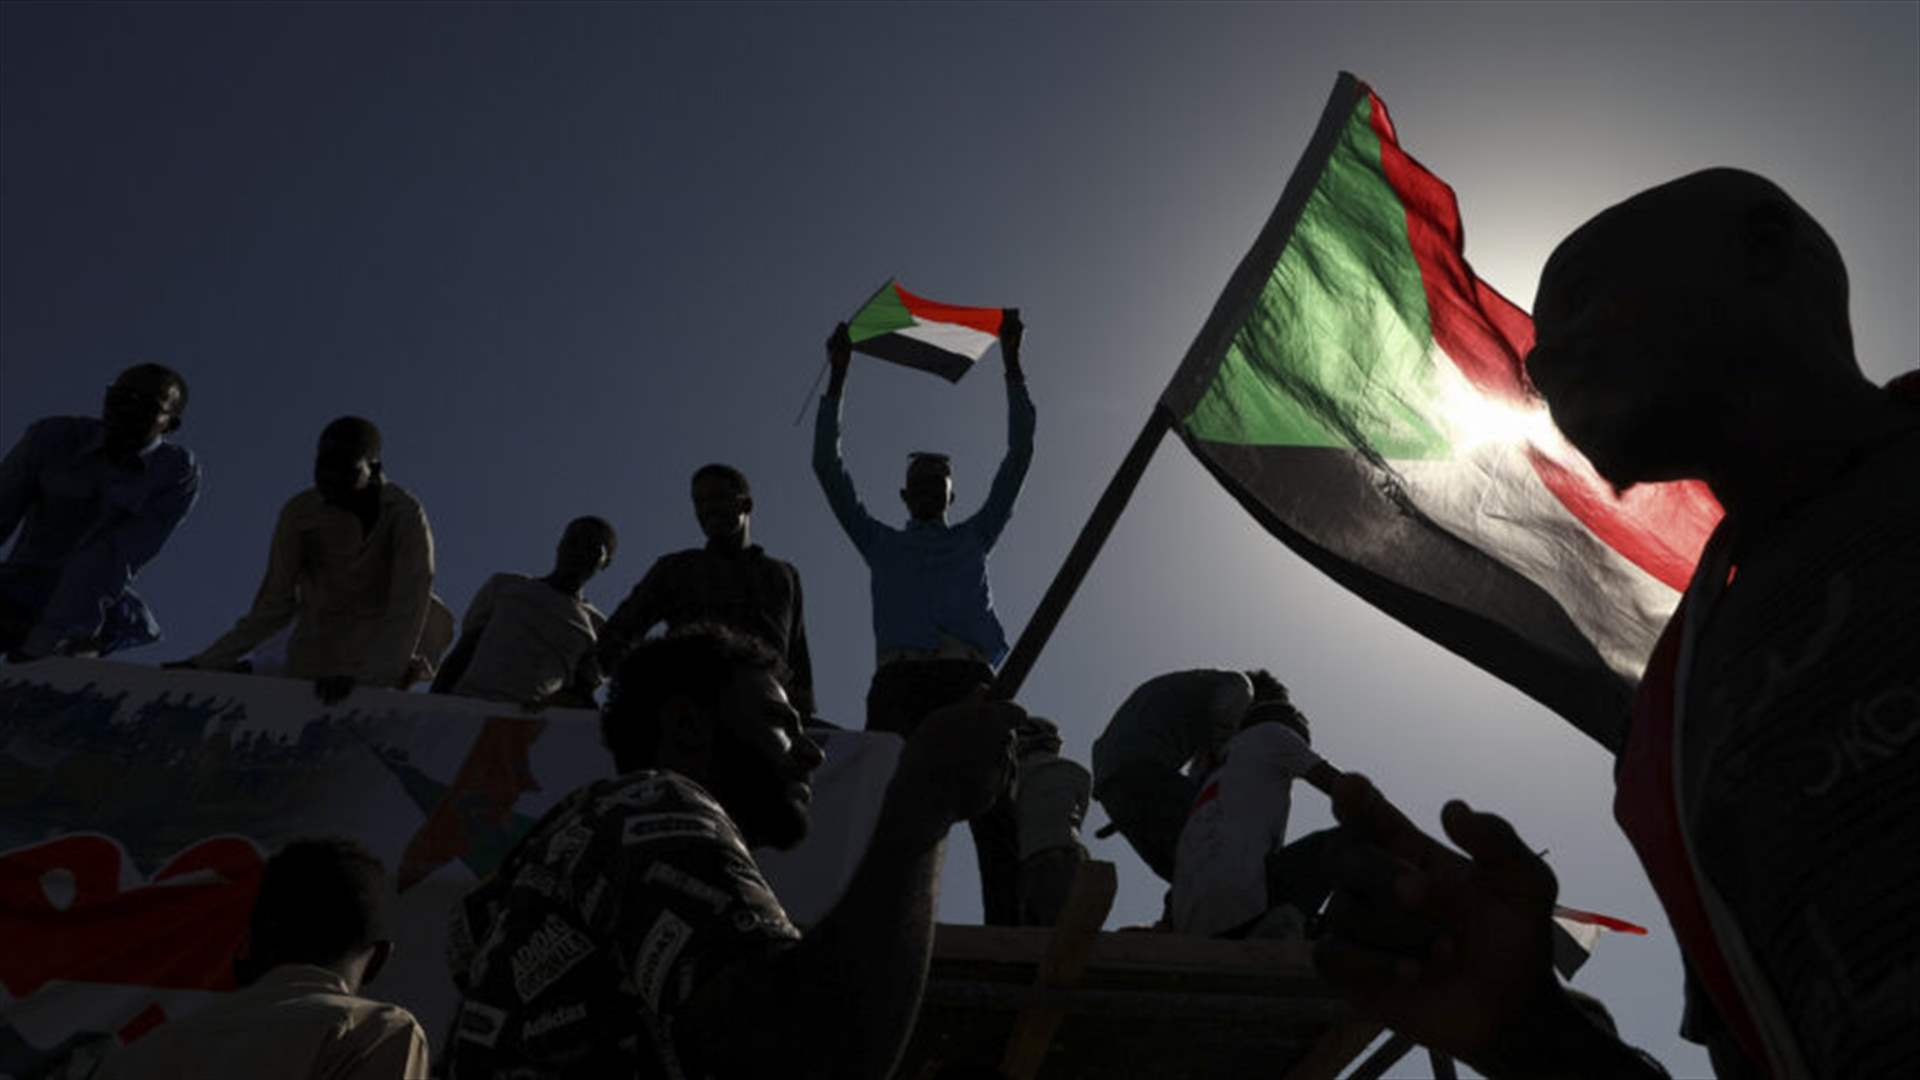 Paris Conference on Sudan pledges &euro;2 billion in humanitarian aid